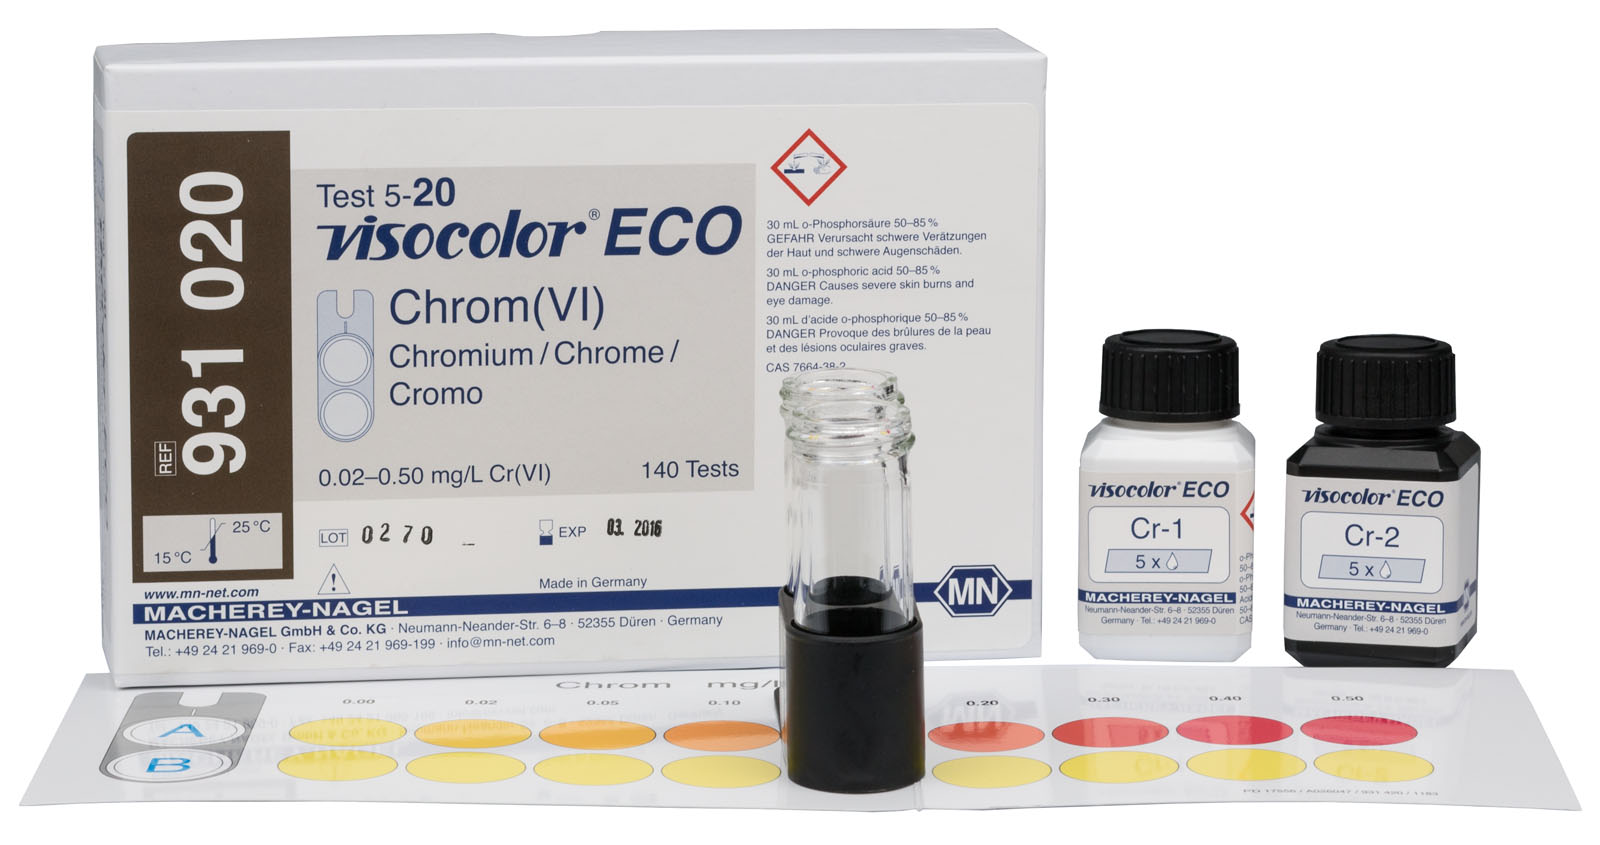 VISOCOLOR® ECO Chromium Test Kit